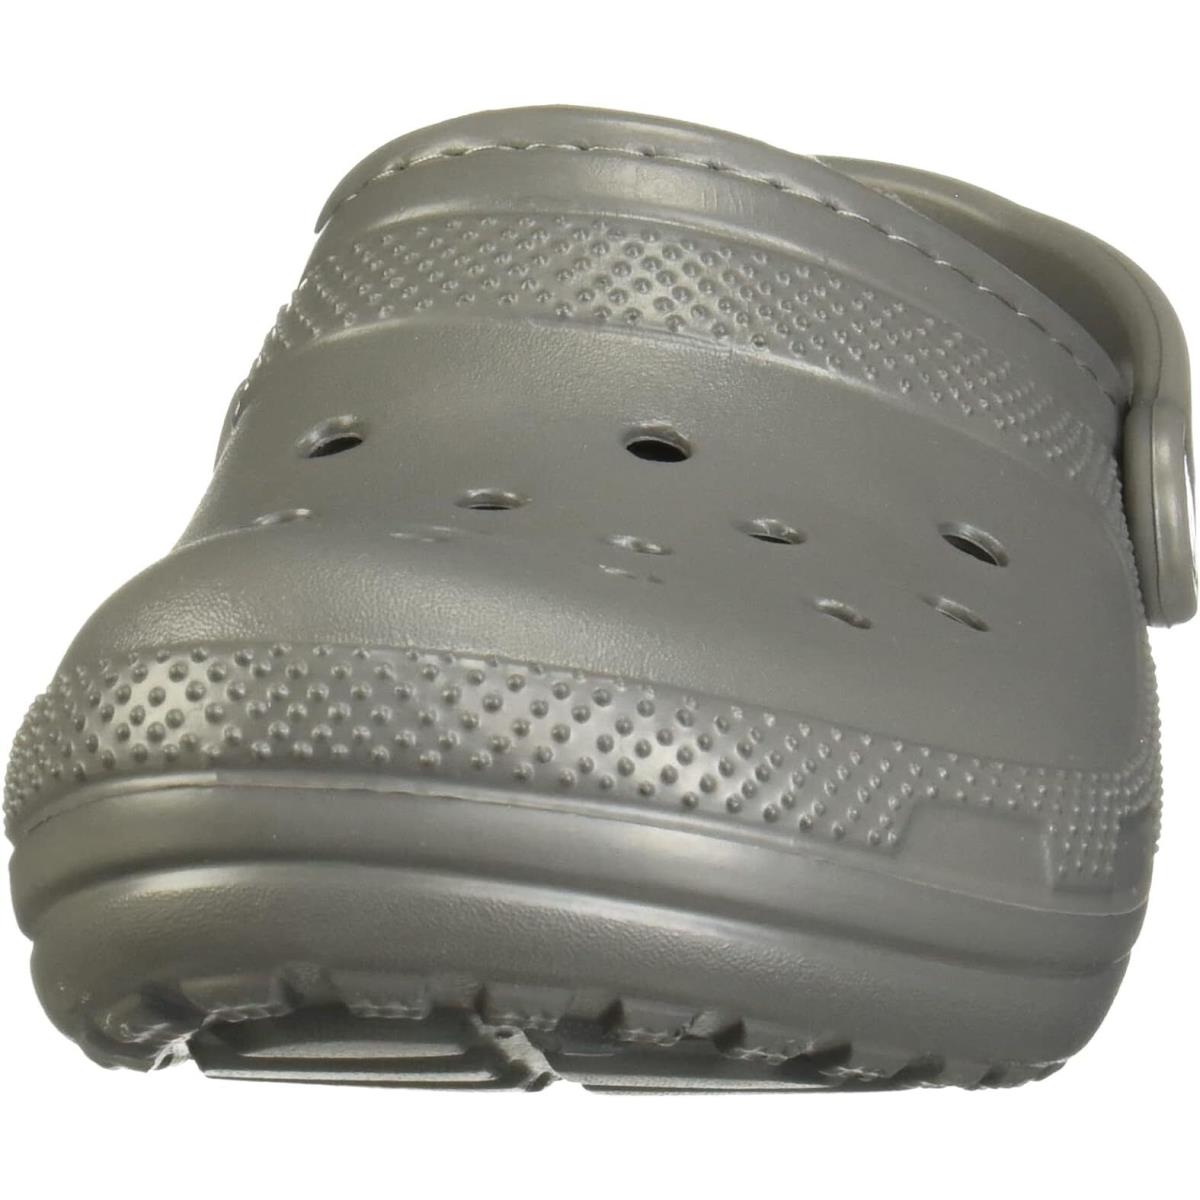 Crocs Unisex Adult Classic Lined Clog Slate Grey/smoke Size M4 - Slate Grey/Smoke